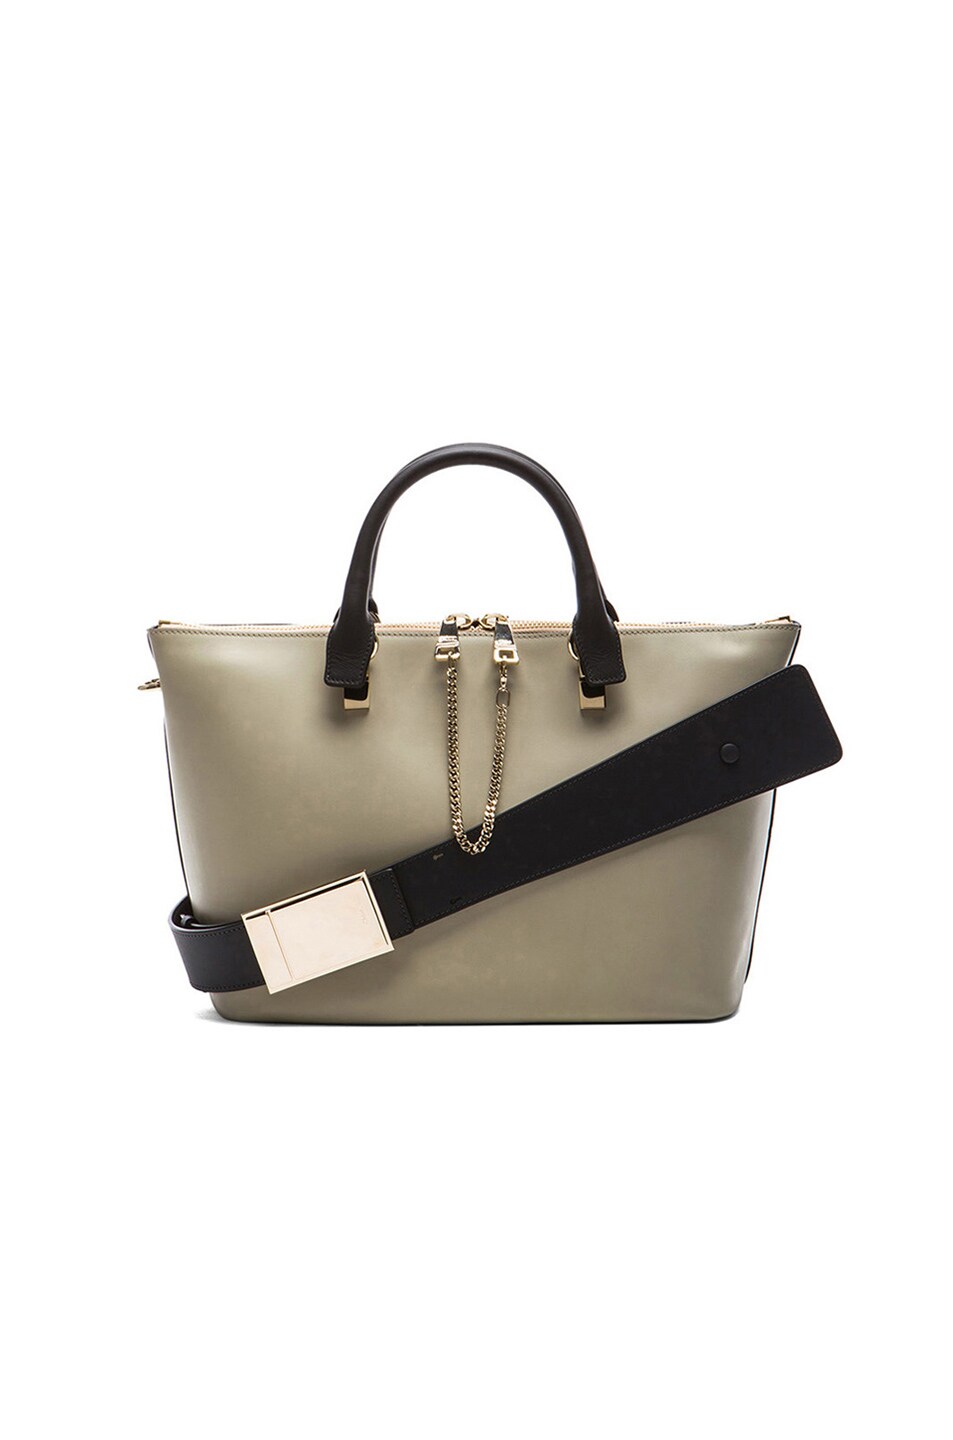 Chloe Medium Baylee Handbag in Marshmallow Grey \u0026amp; Black | FWRD